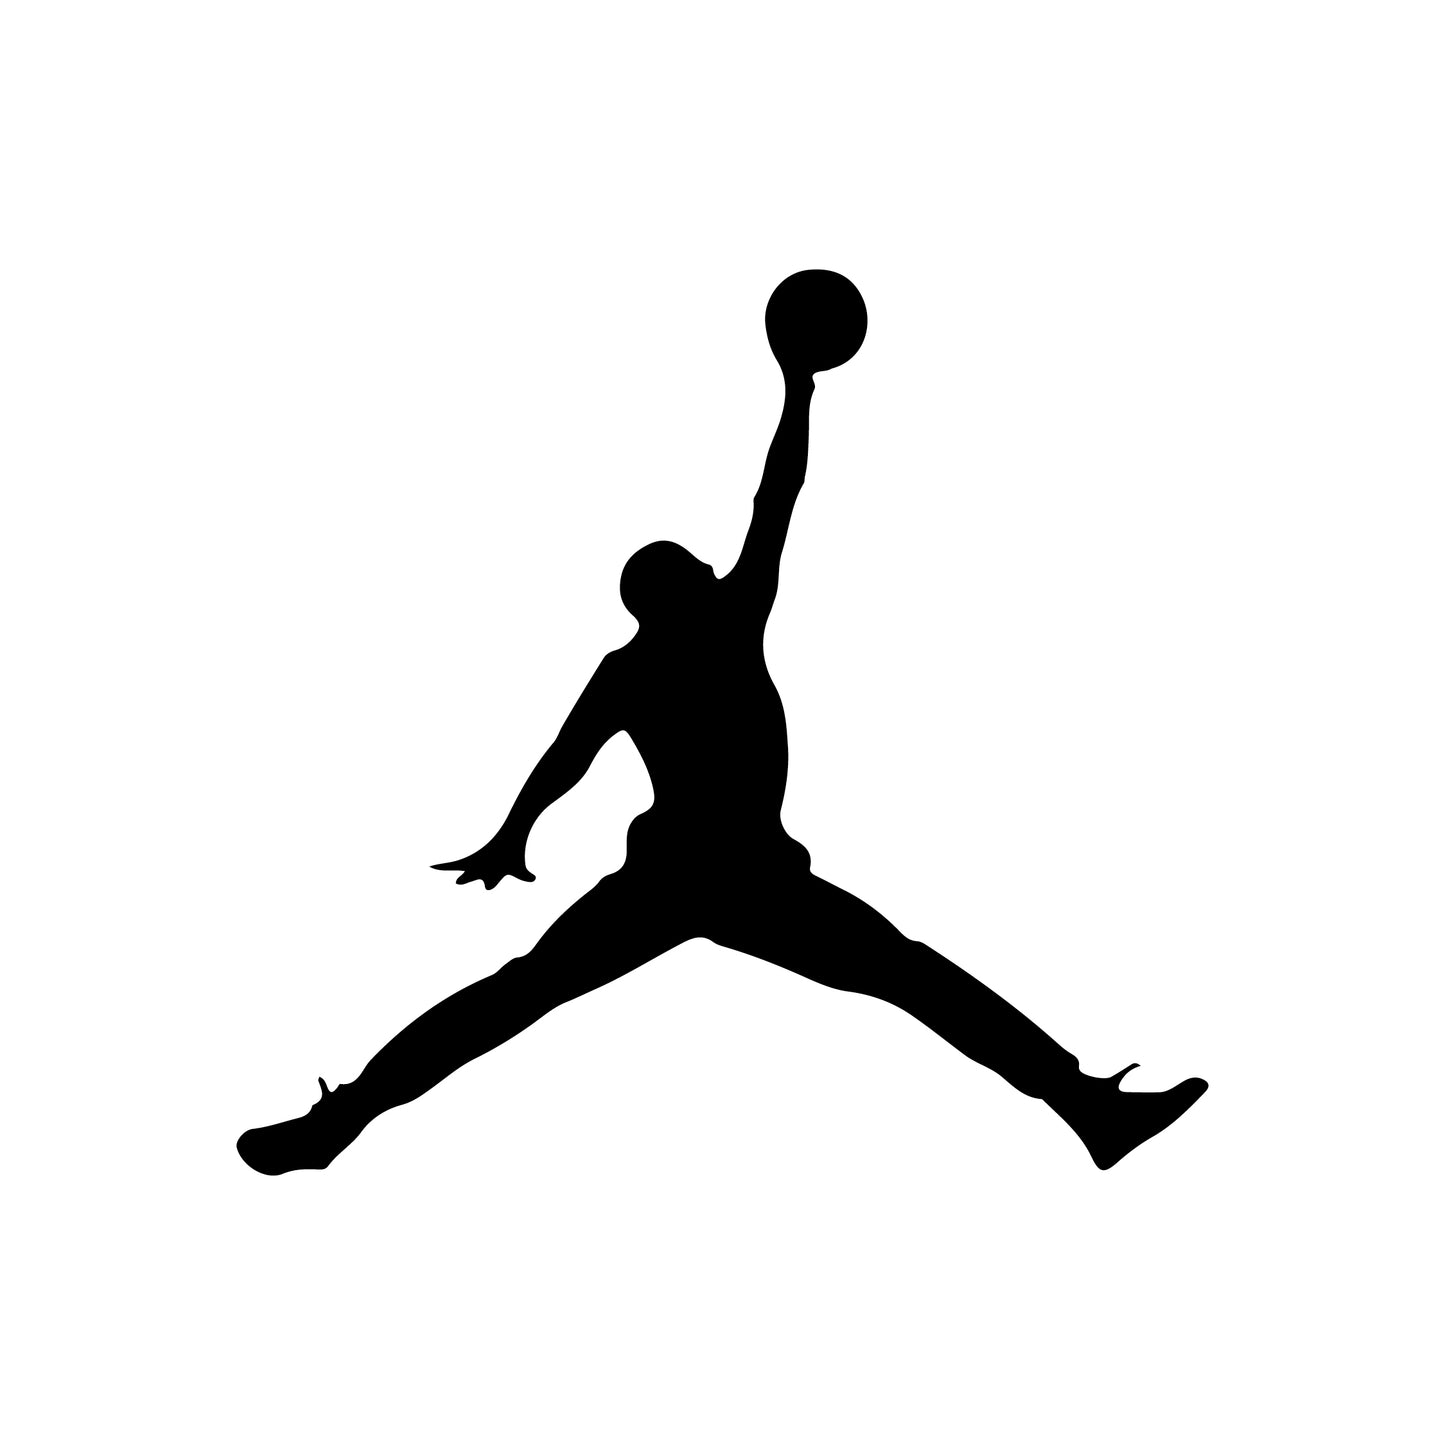 Jordan - Basketball Ipad decal vinyl sticker design